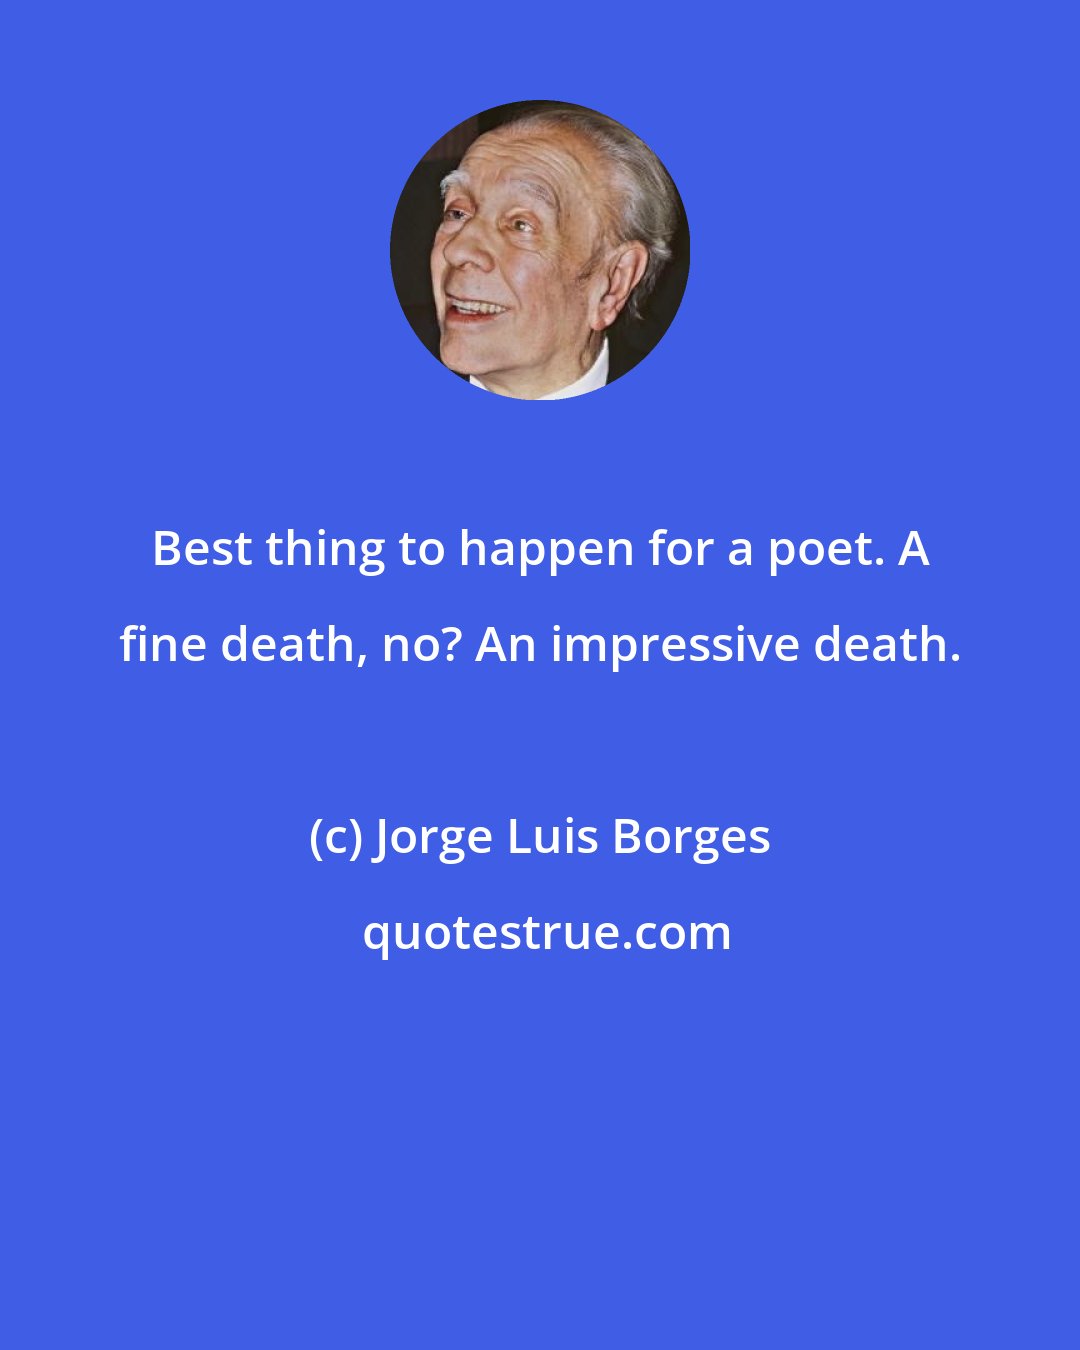 Jorge Luis Borges: Best thing to happen for a poet. A fine death, no? An impressive death.